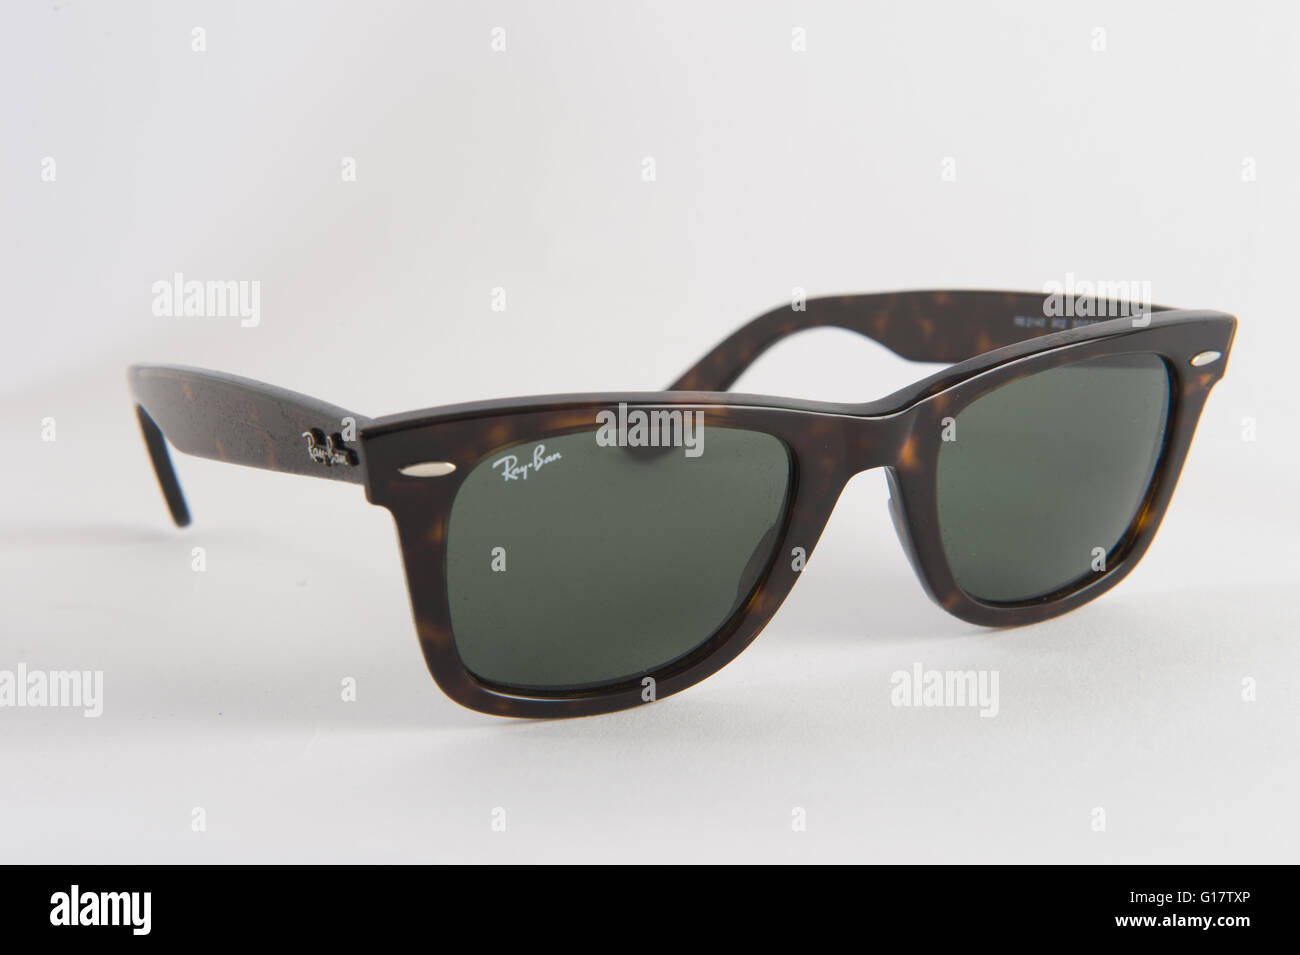 Ray Ban Wayfarer sunglasses Stock Photo